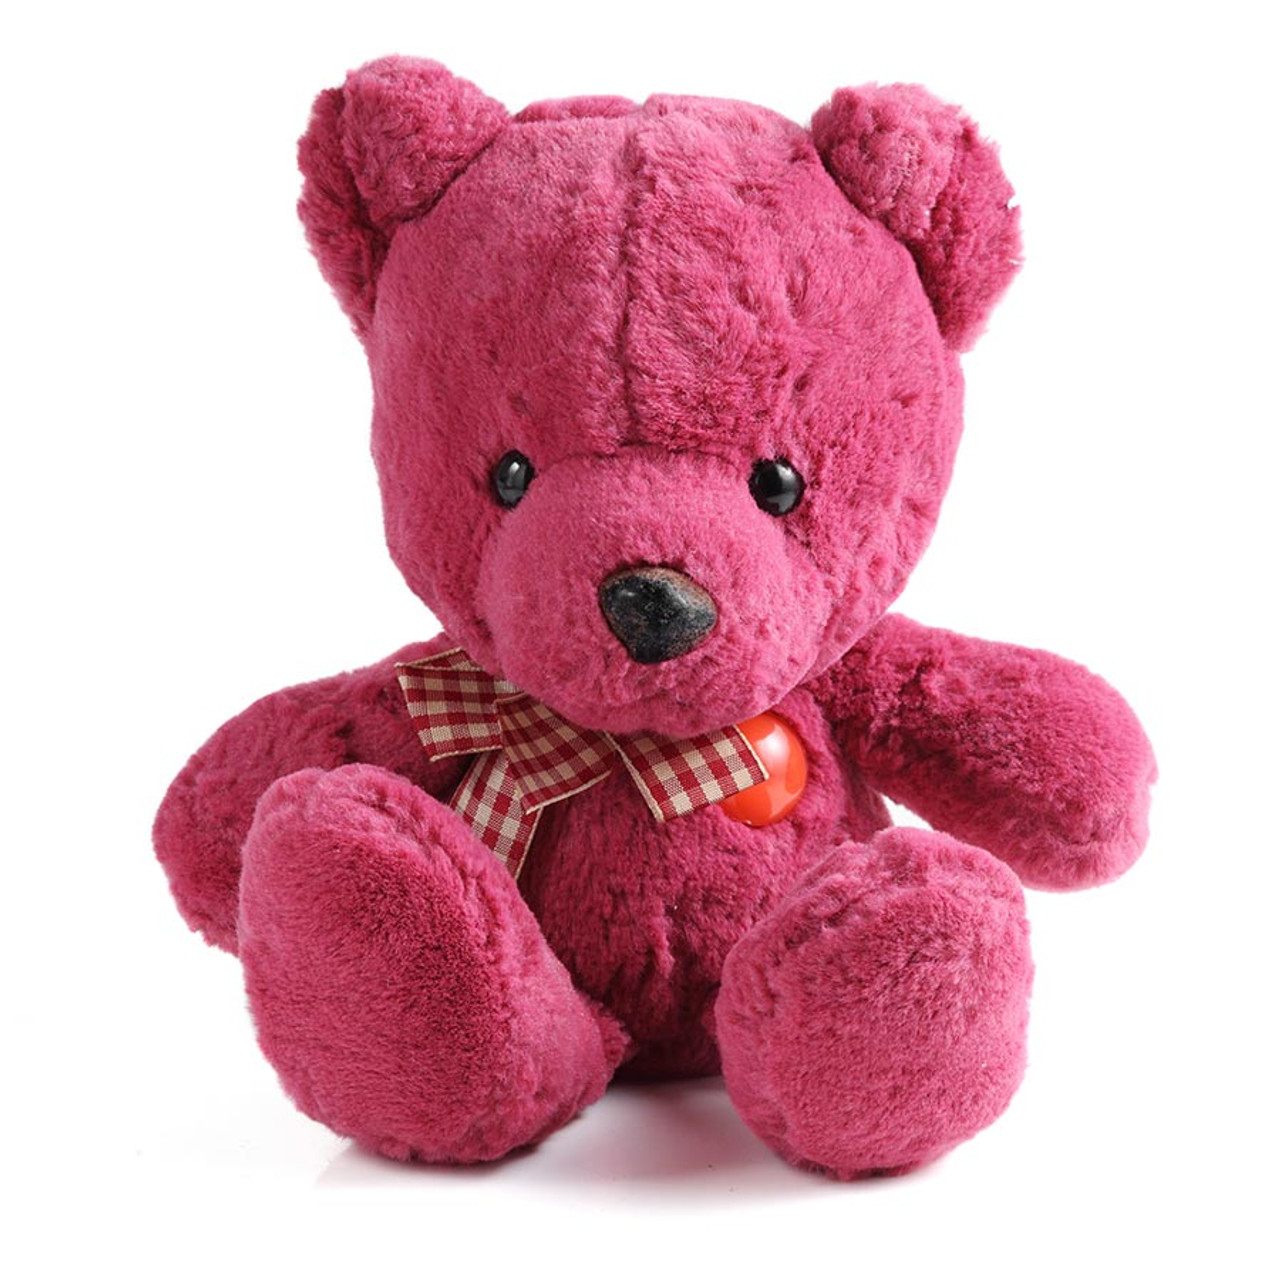 Hot Pink Teddy Bear